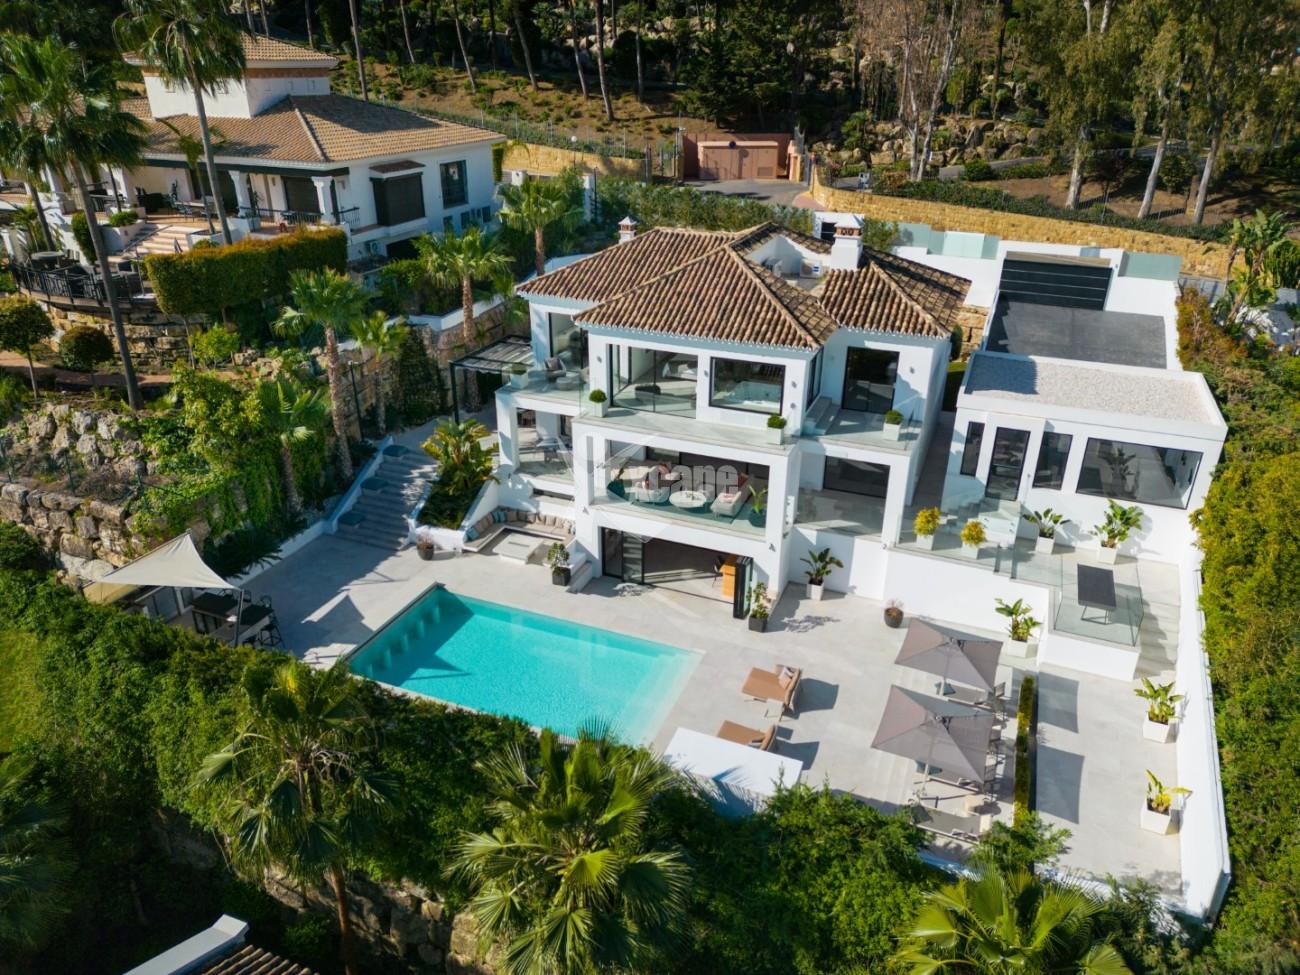 Villa Investment Opportunity Marbella (10)